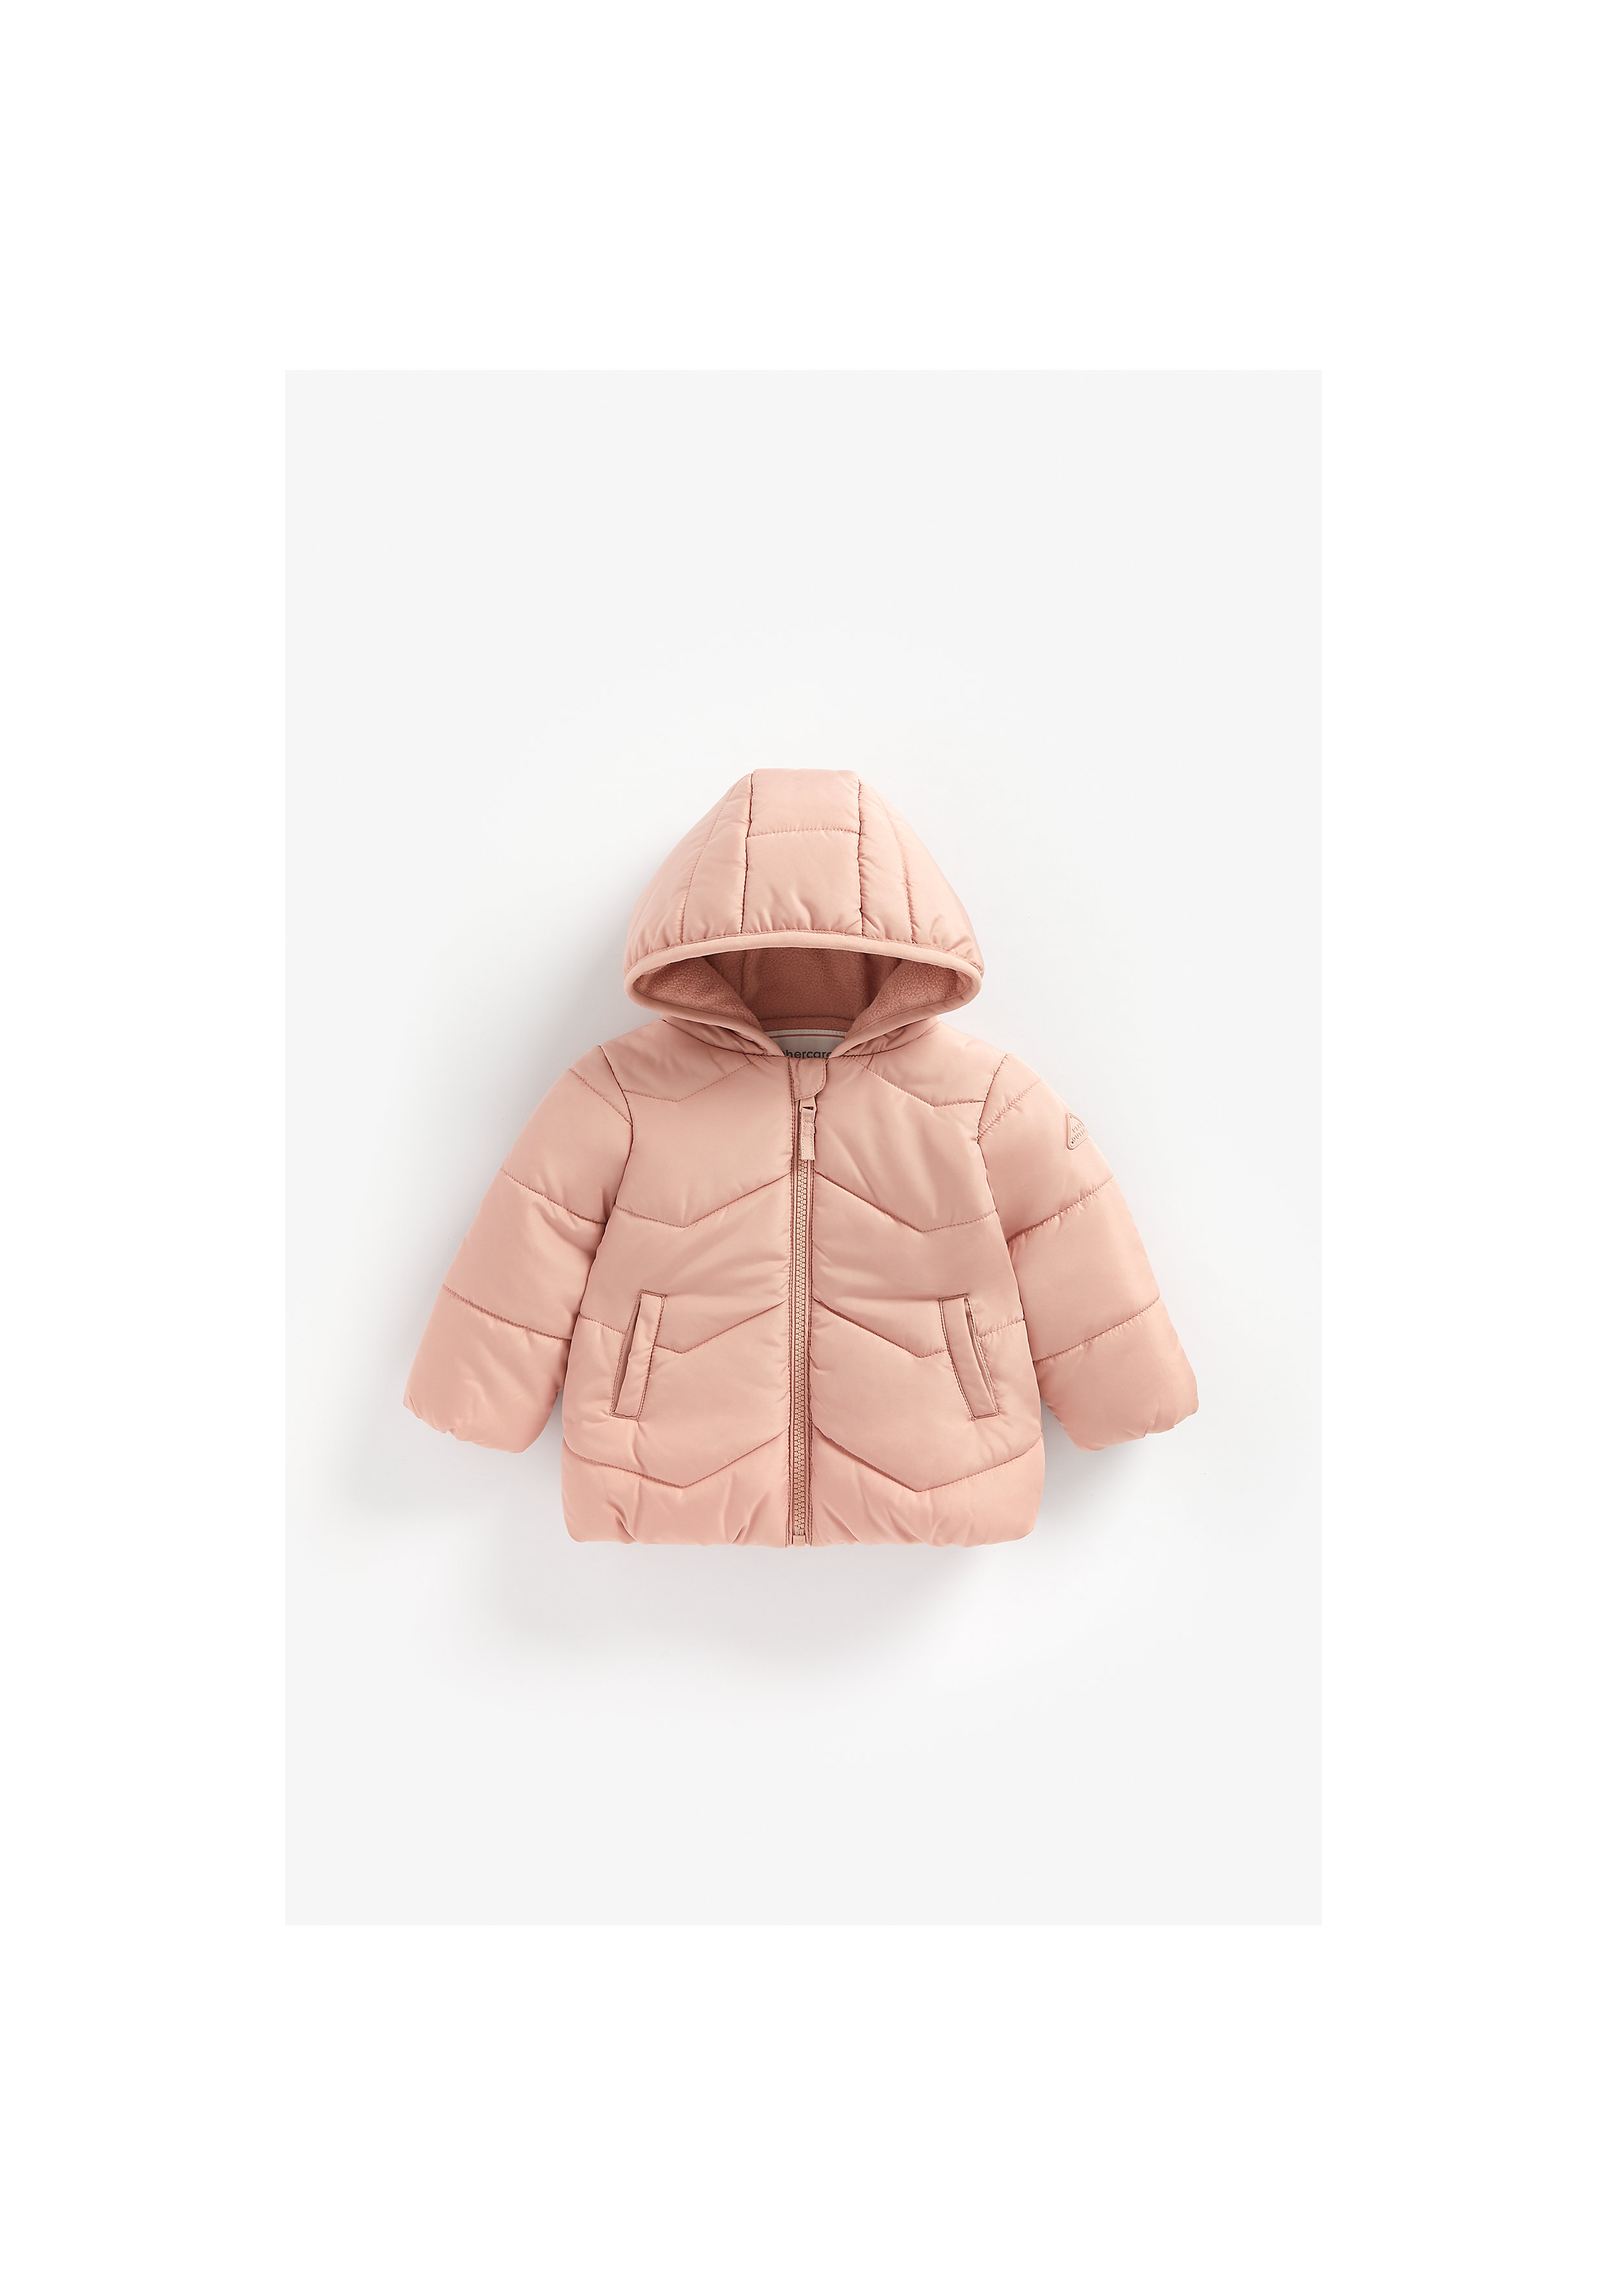 Mothercare | Girls Full Sleeves Fleece Lined Jacket Hooded - Pink 0